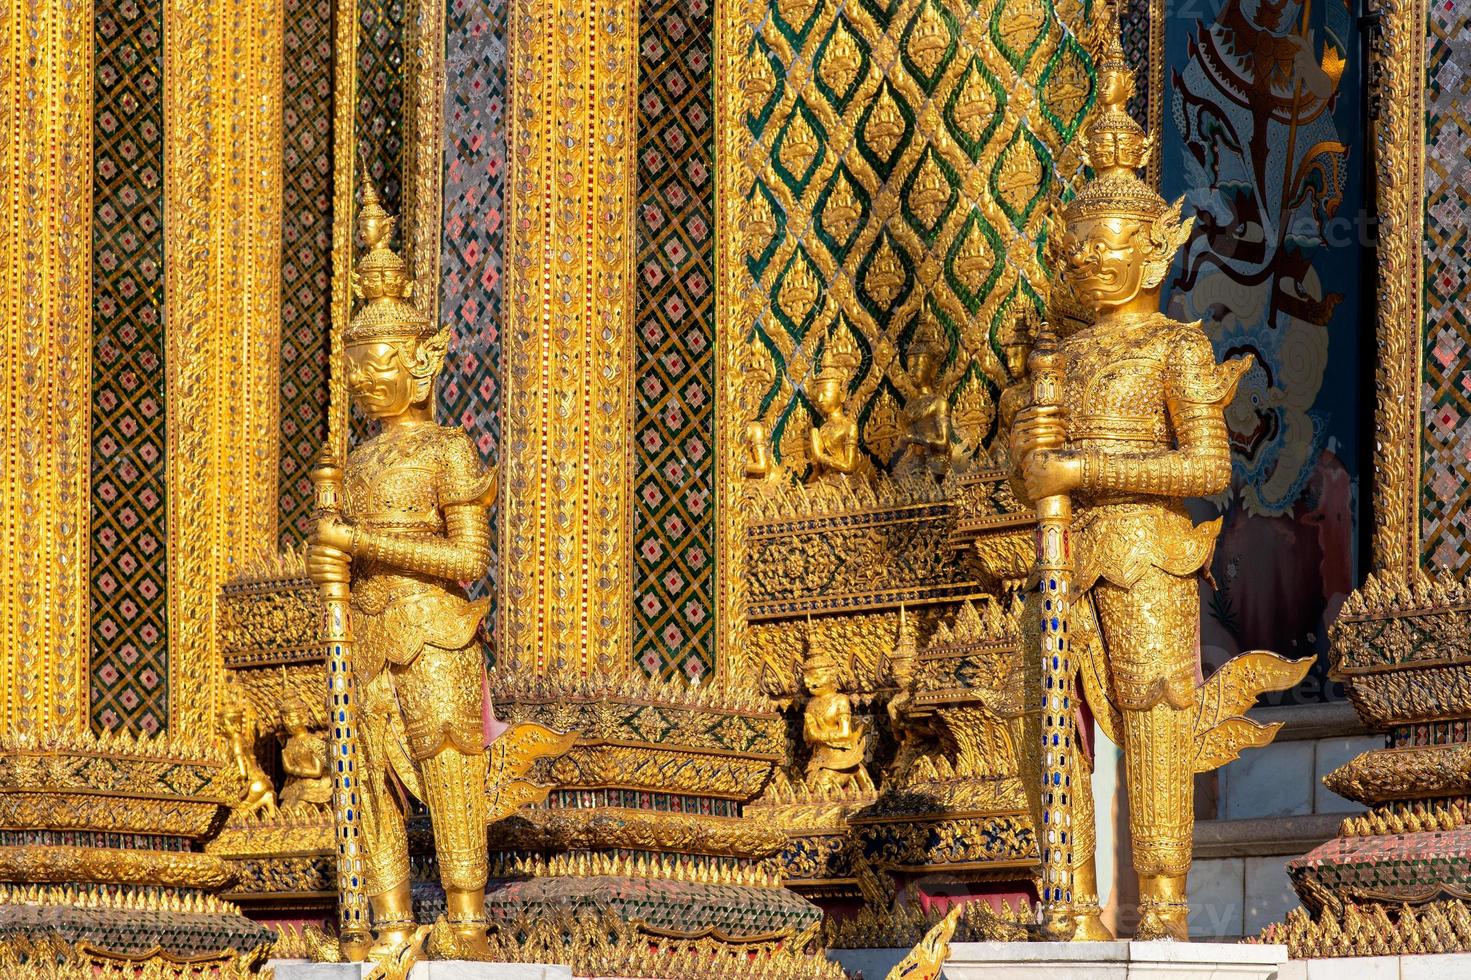 templo do Buda Esmeralda ou templo wat phra kaew em bangkok, thailnd foto